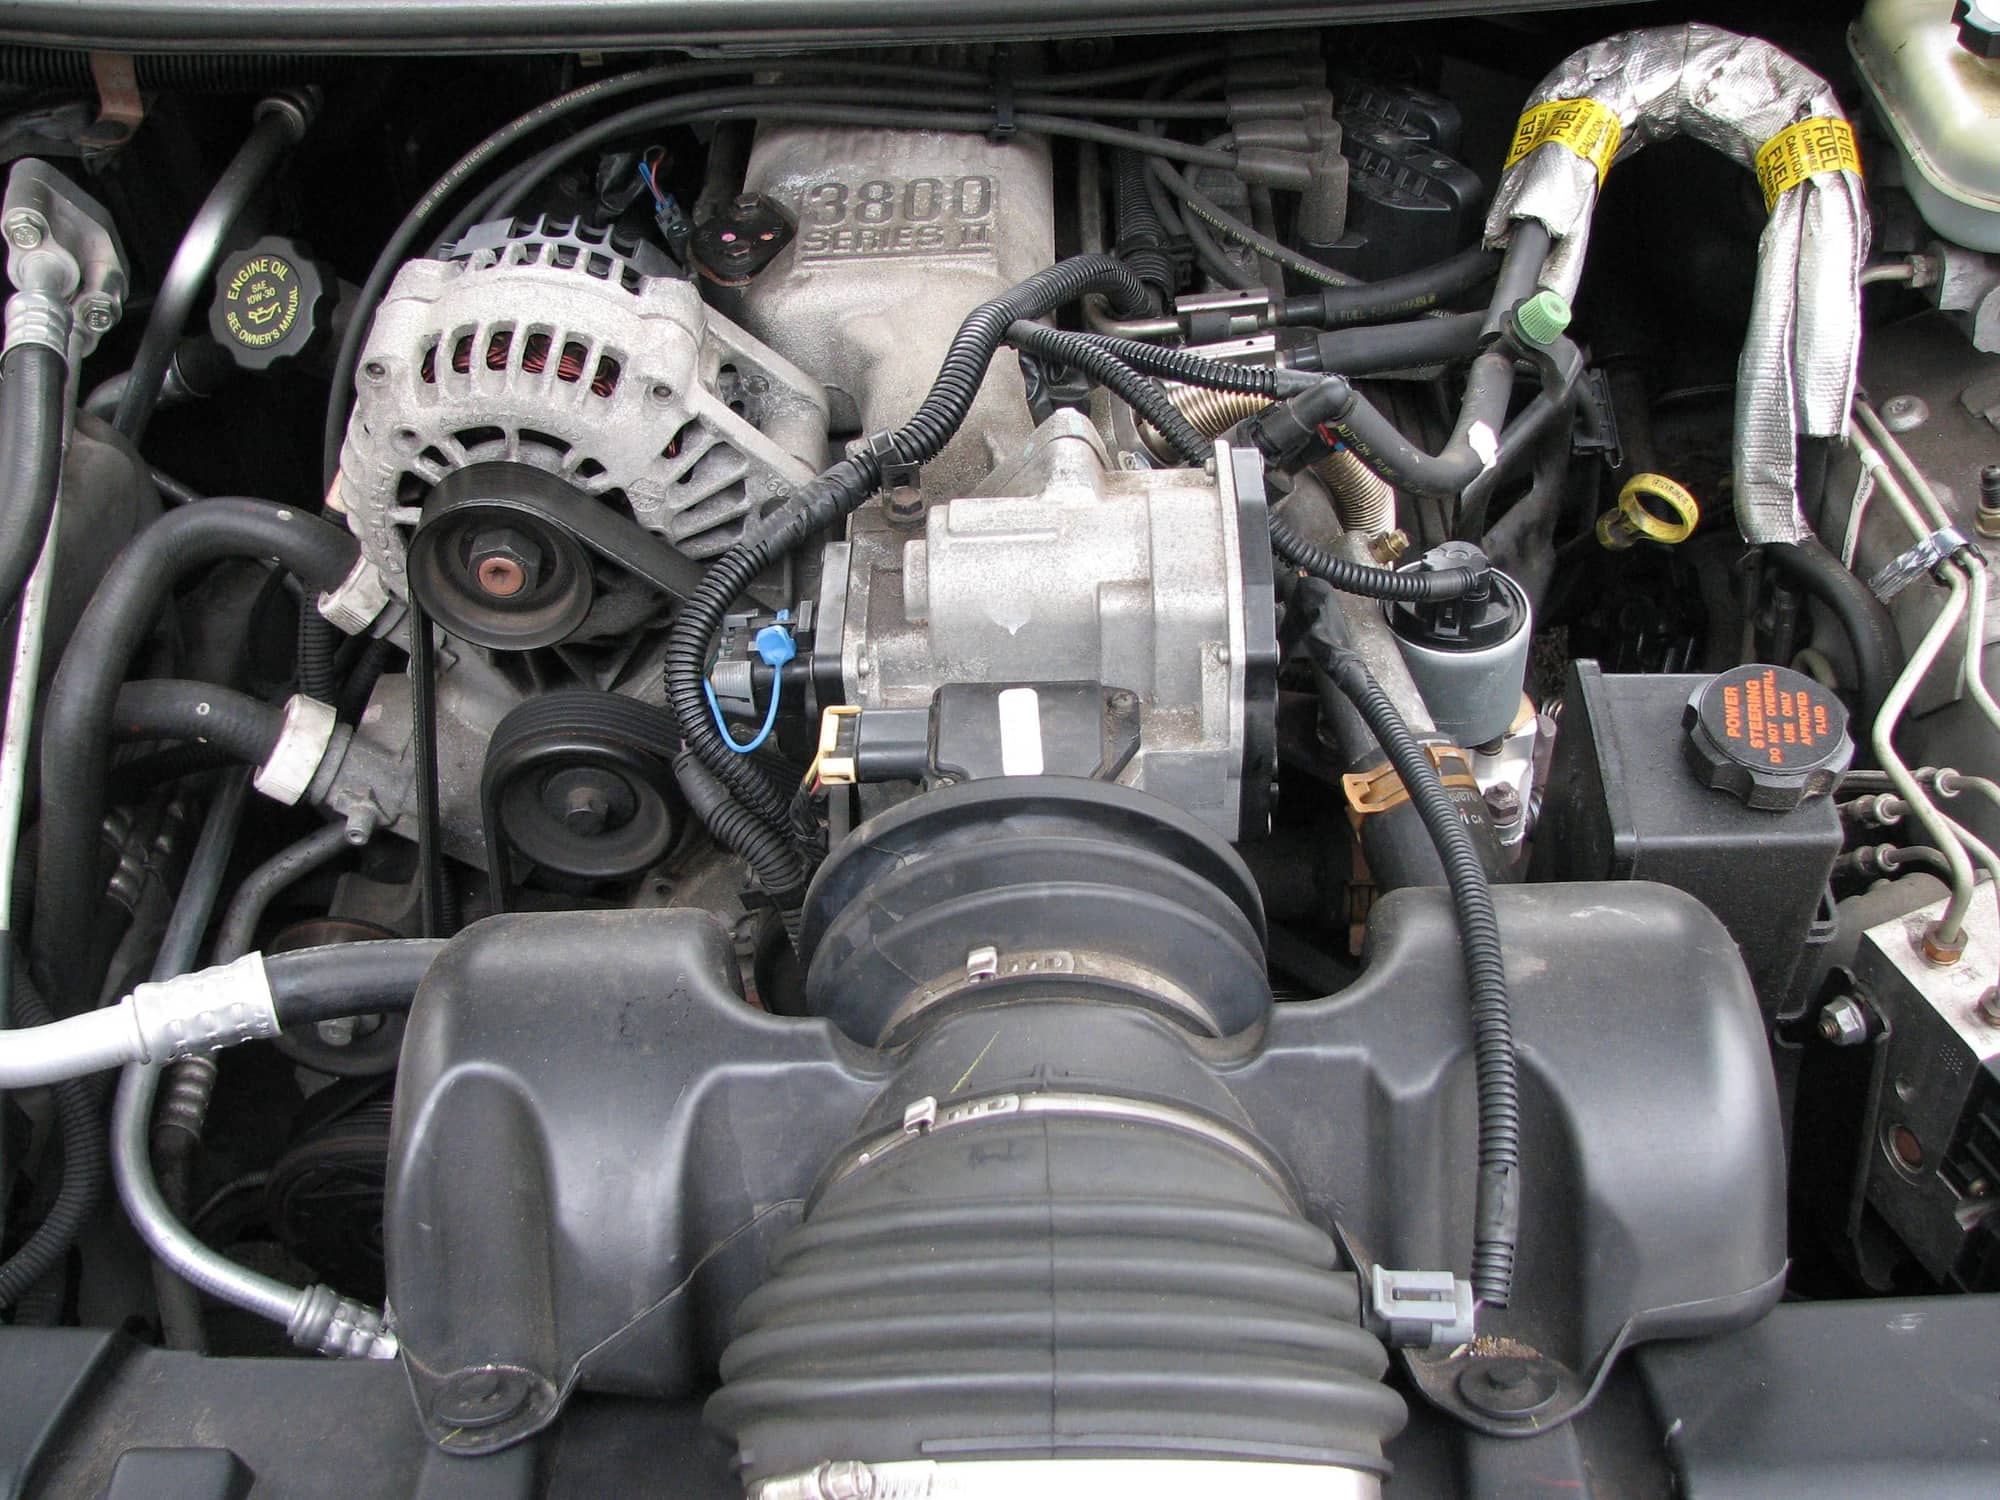 2002 Chevrolet Camaro - 1998-2002 Camaro/Firebird parts - Engine - Complete - $300 - Napa, CA 94559, United States